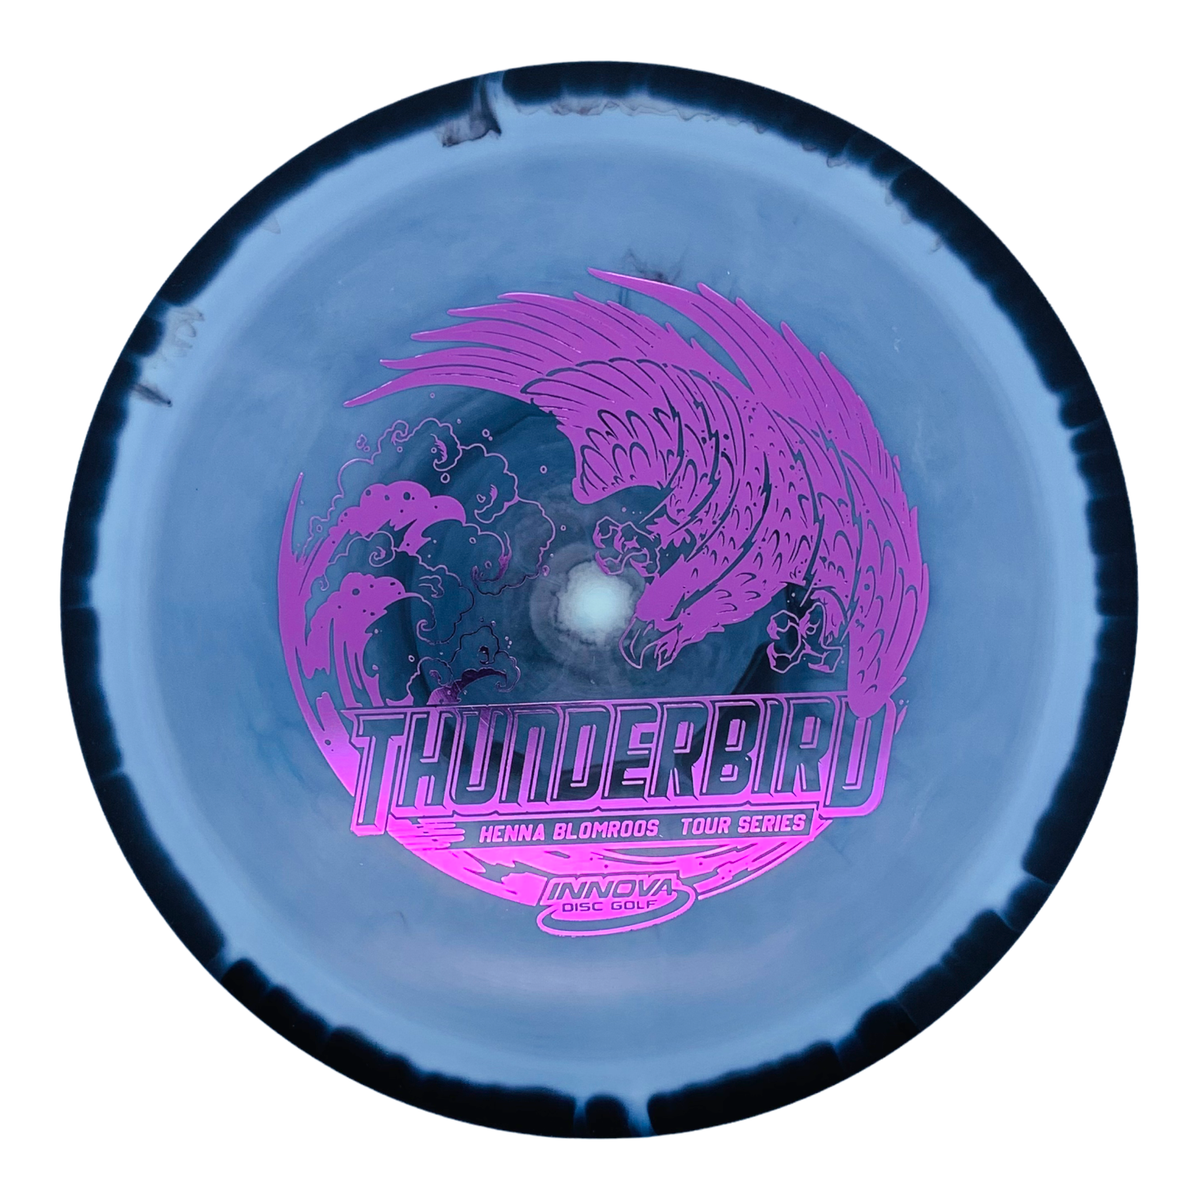 Innova Halo Star Thunderbird - Henna Blomroos Tour Series